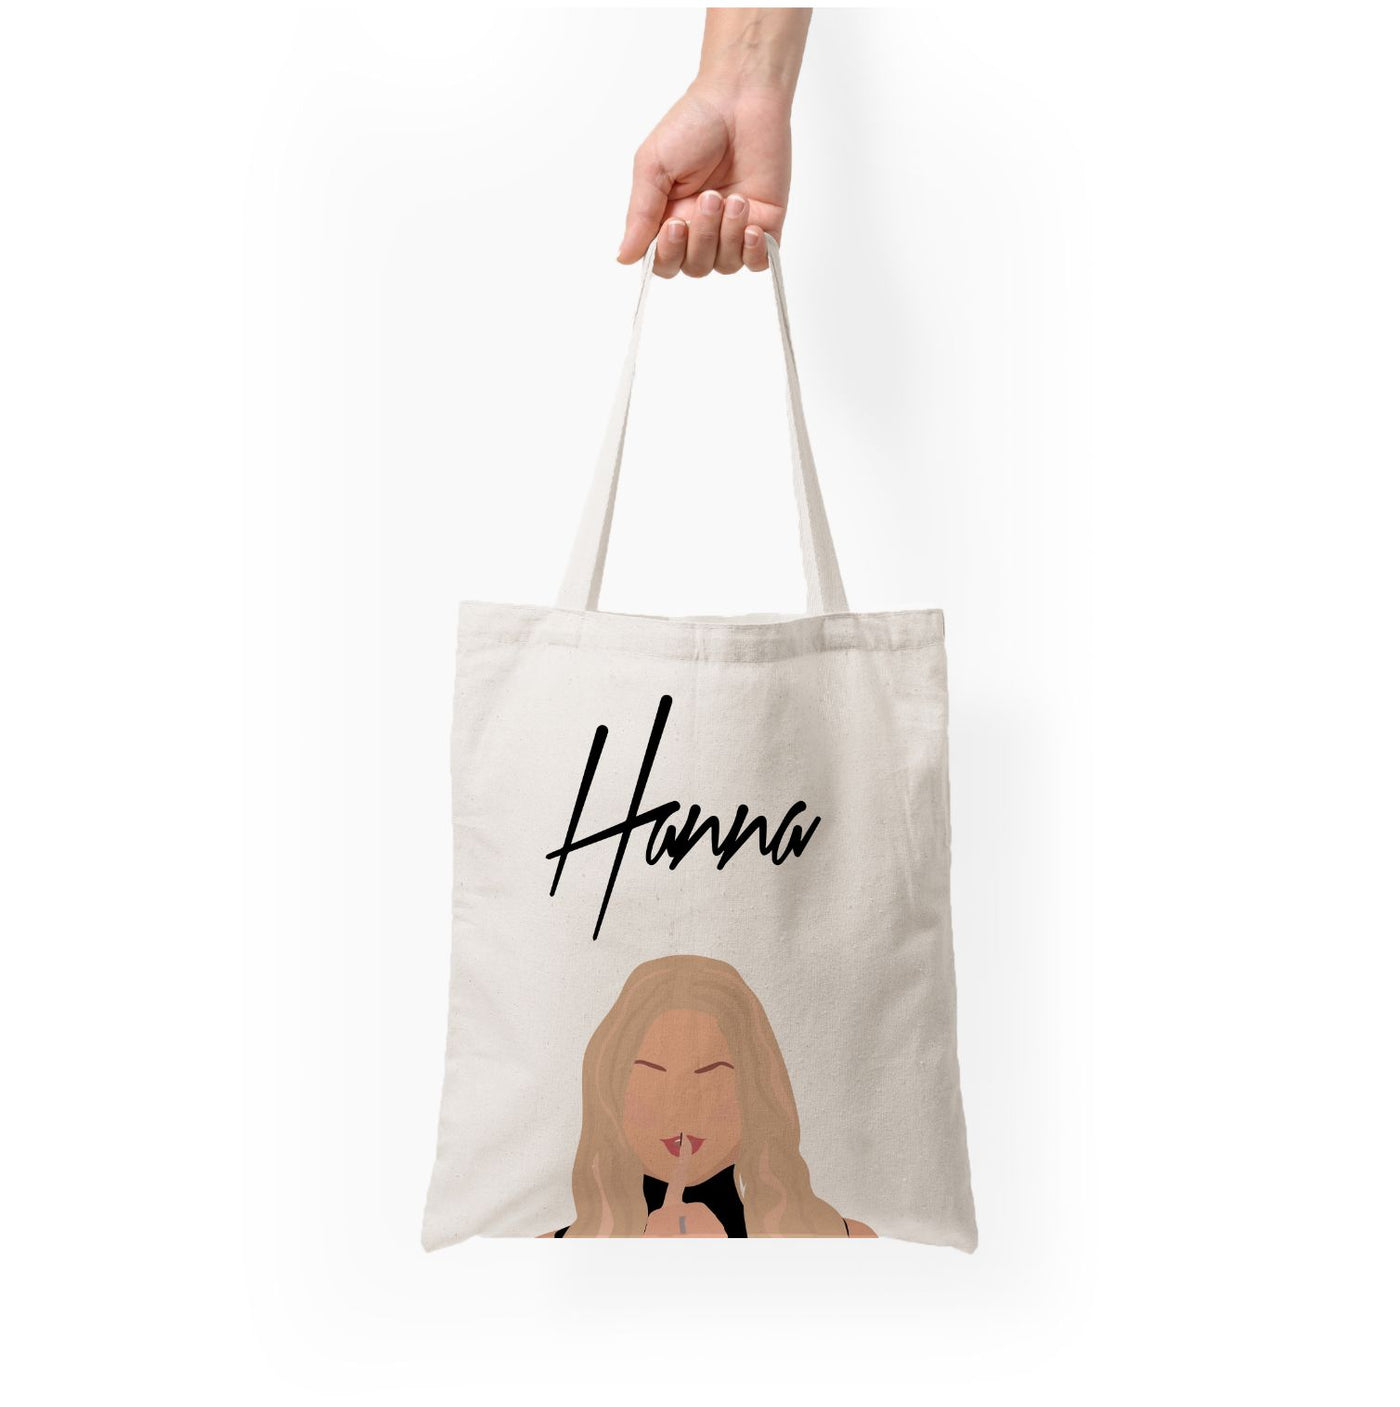 Hanna - Pretty Little Liars Tote Bag